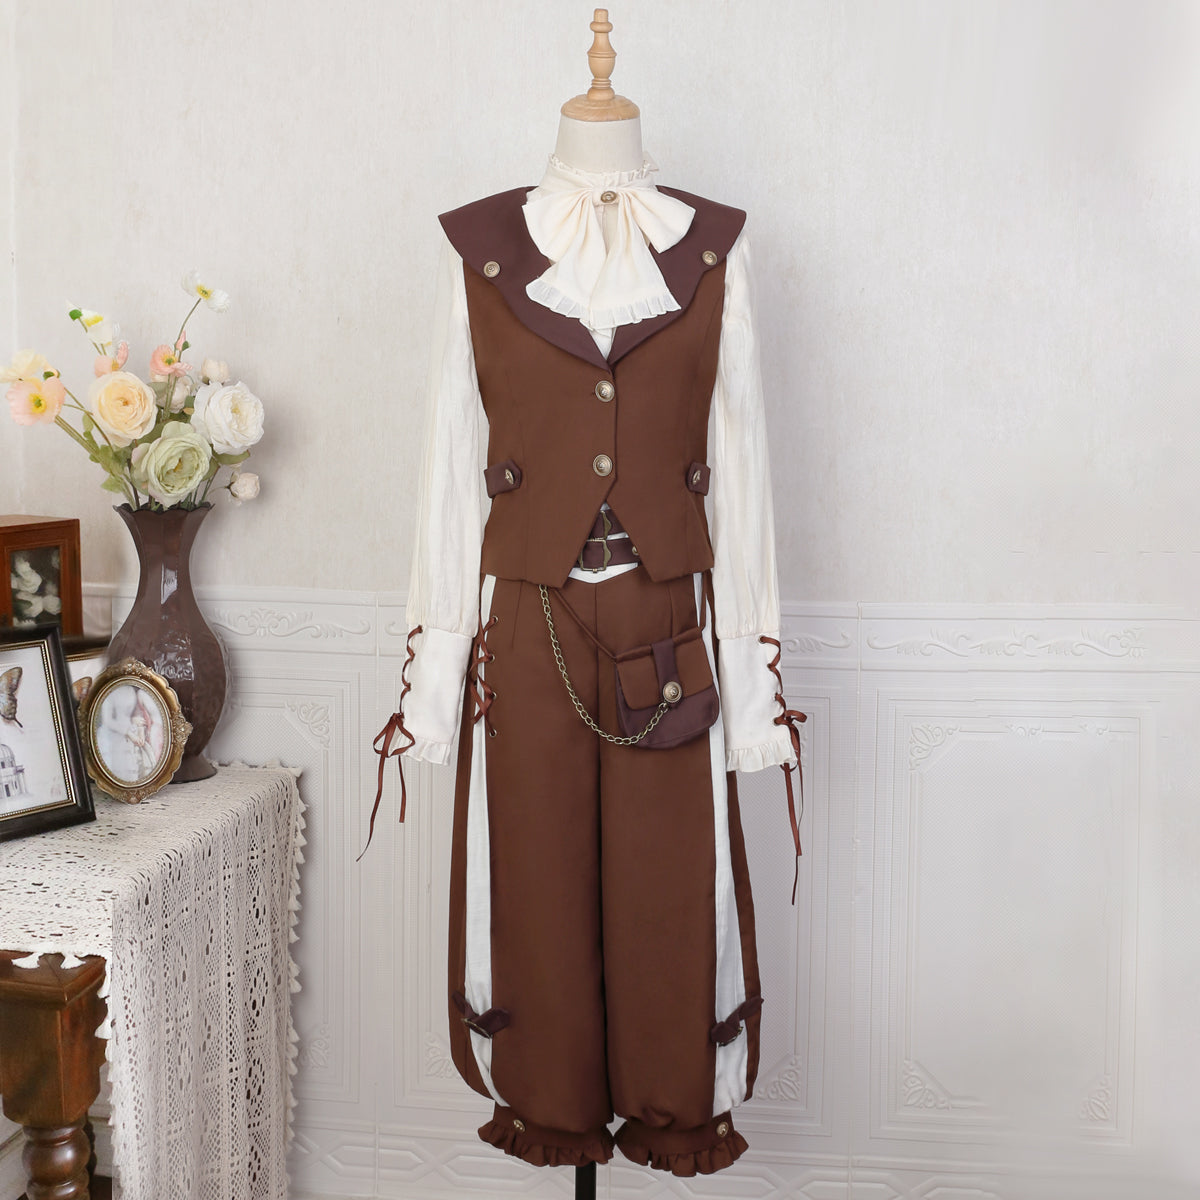 Letters from Unknown Star~Pirate Guide~Vintage Lolita Suit Vest JSK Dress S Male version 4-piece set(overalls+vest+shirt+bow tie) 